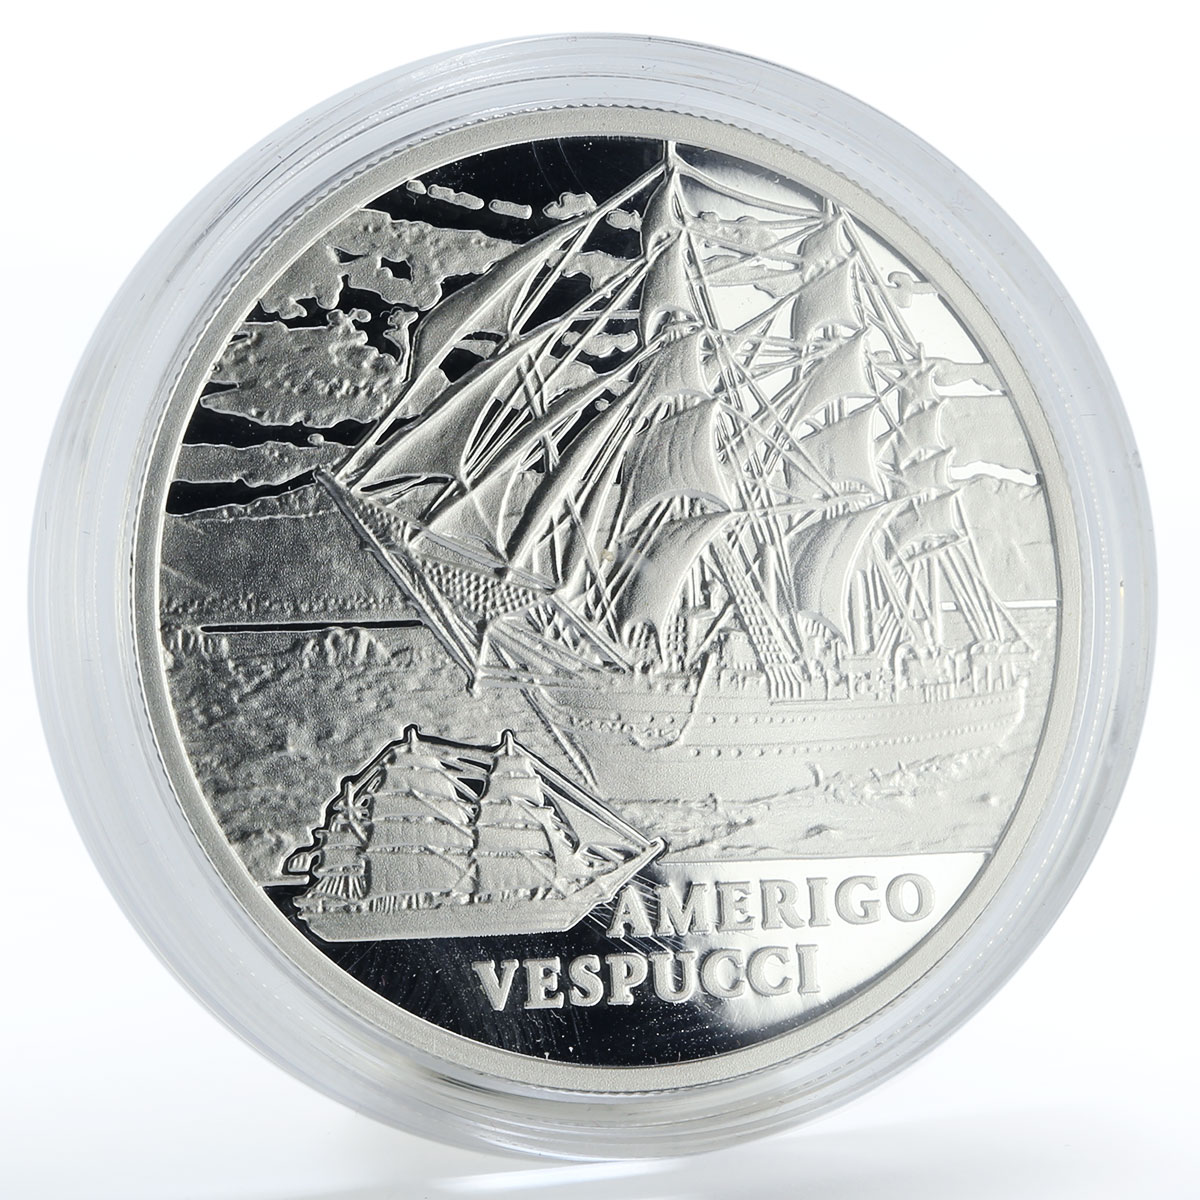 Belarus 20 rubles Sailing Ships Amerigo Vespucci silver coin 2010